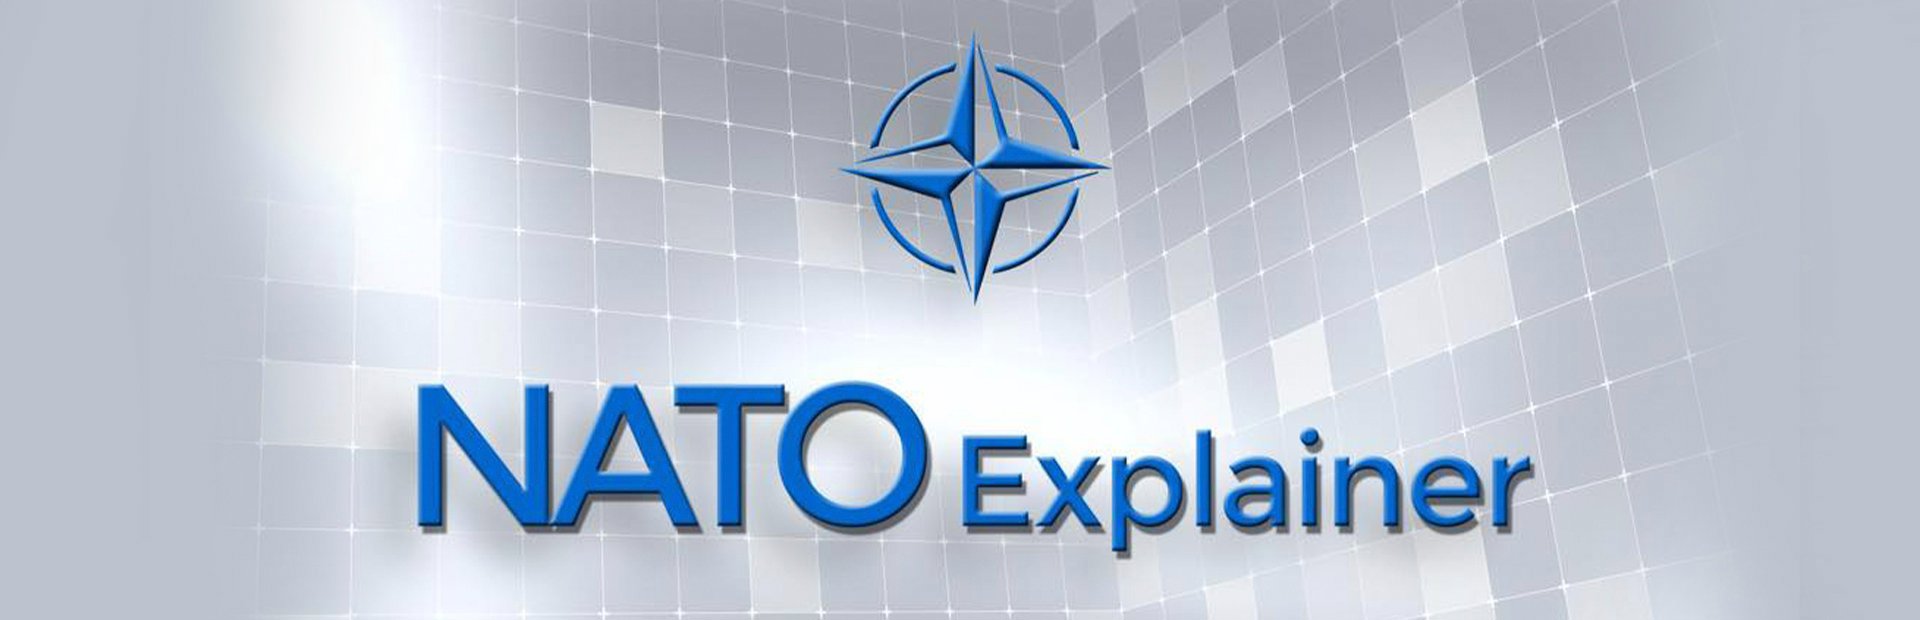 NATO Explainer